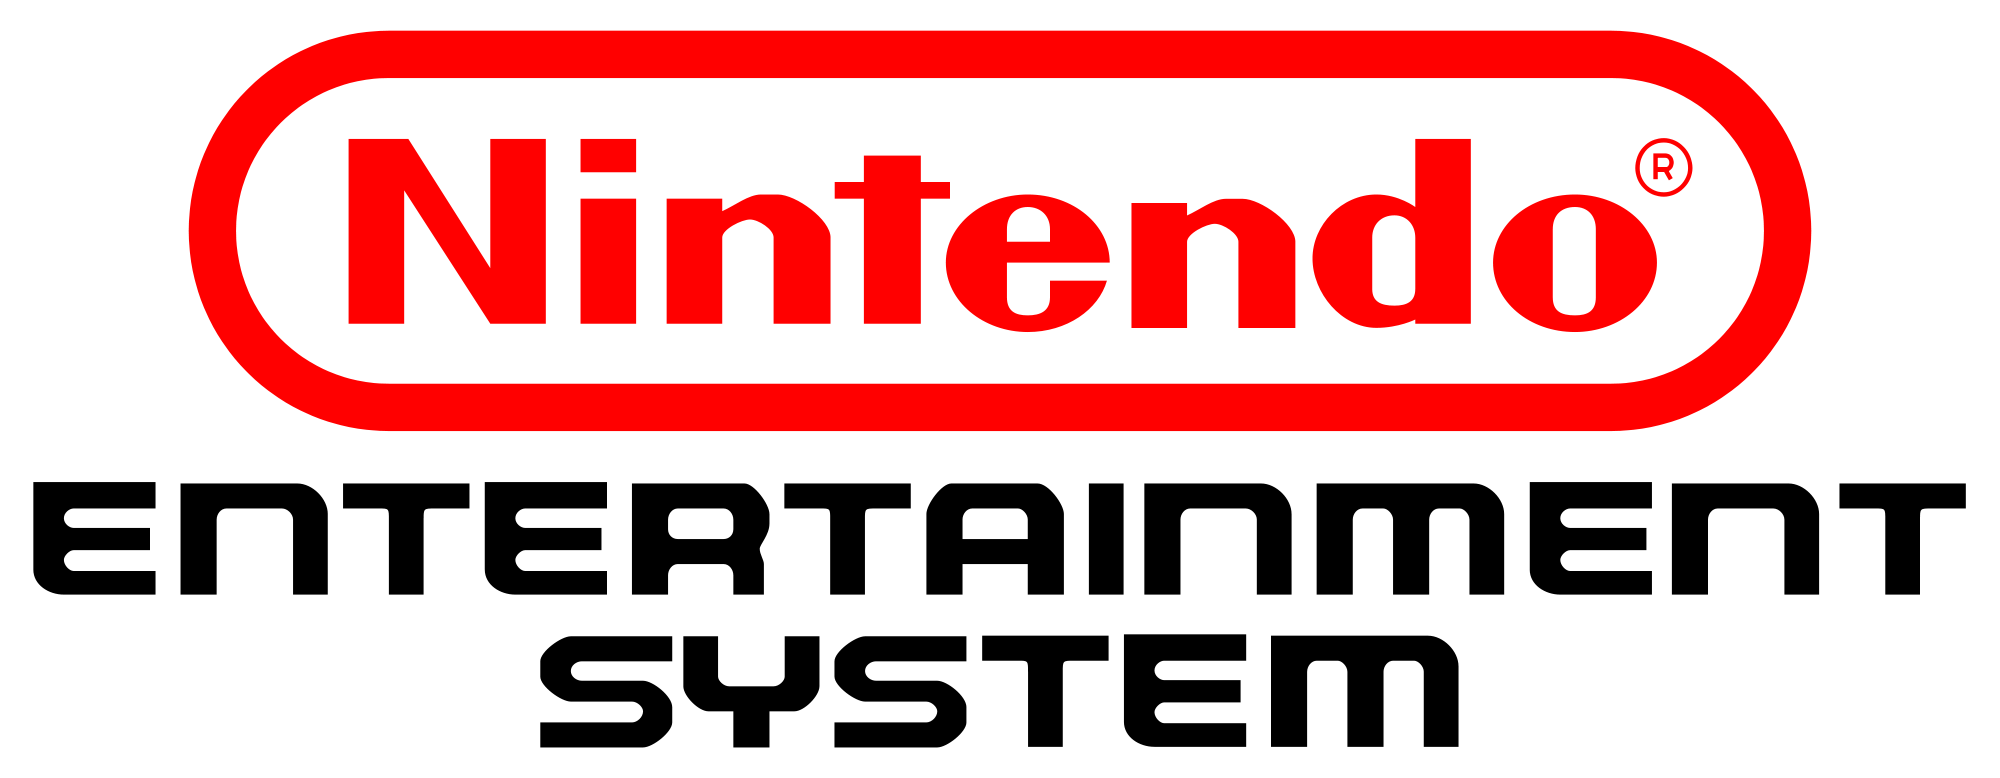 NES Logo.png